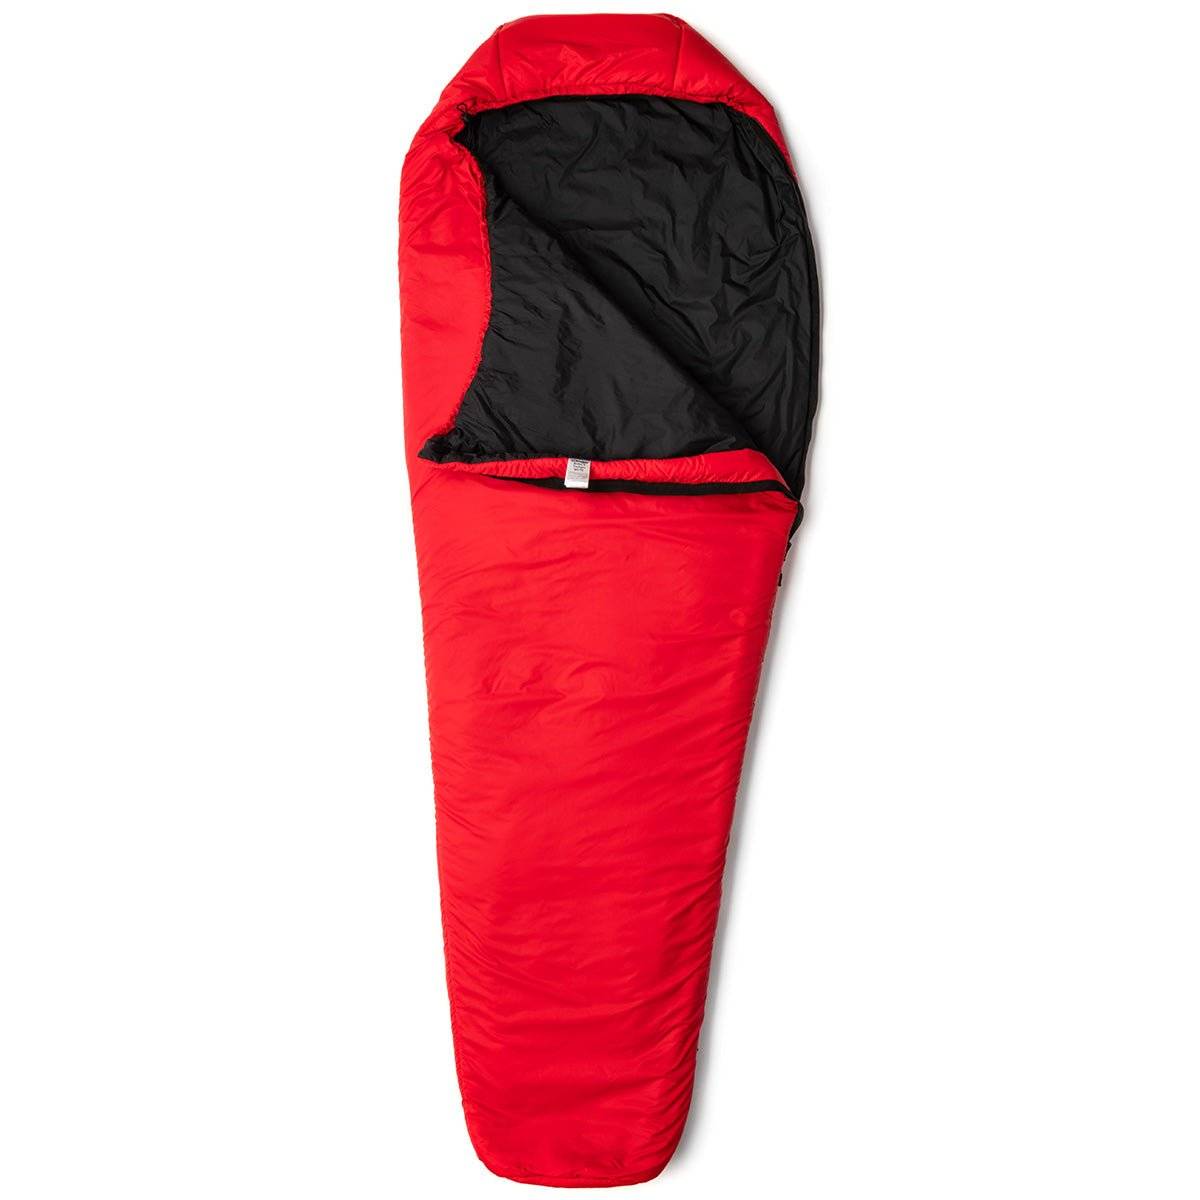 Snugpak Softie 6 Twilight Sleeping Bag Red and Black - John Bull Clothing